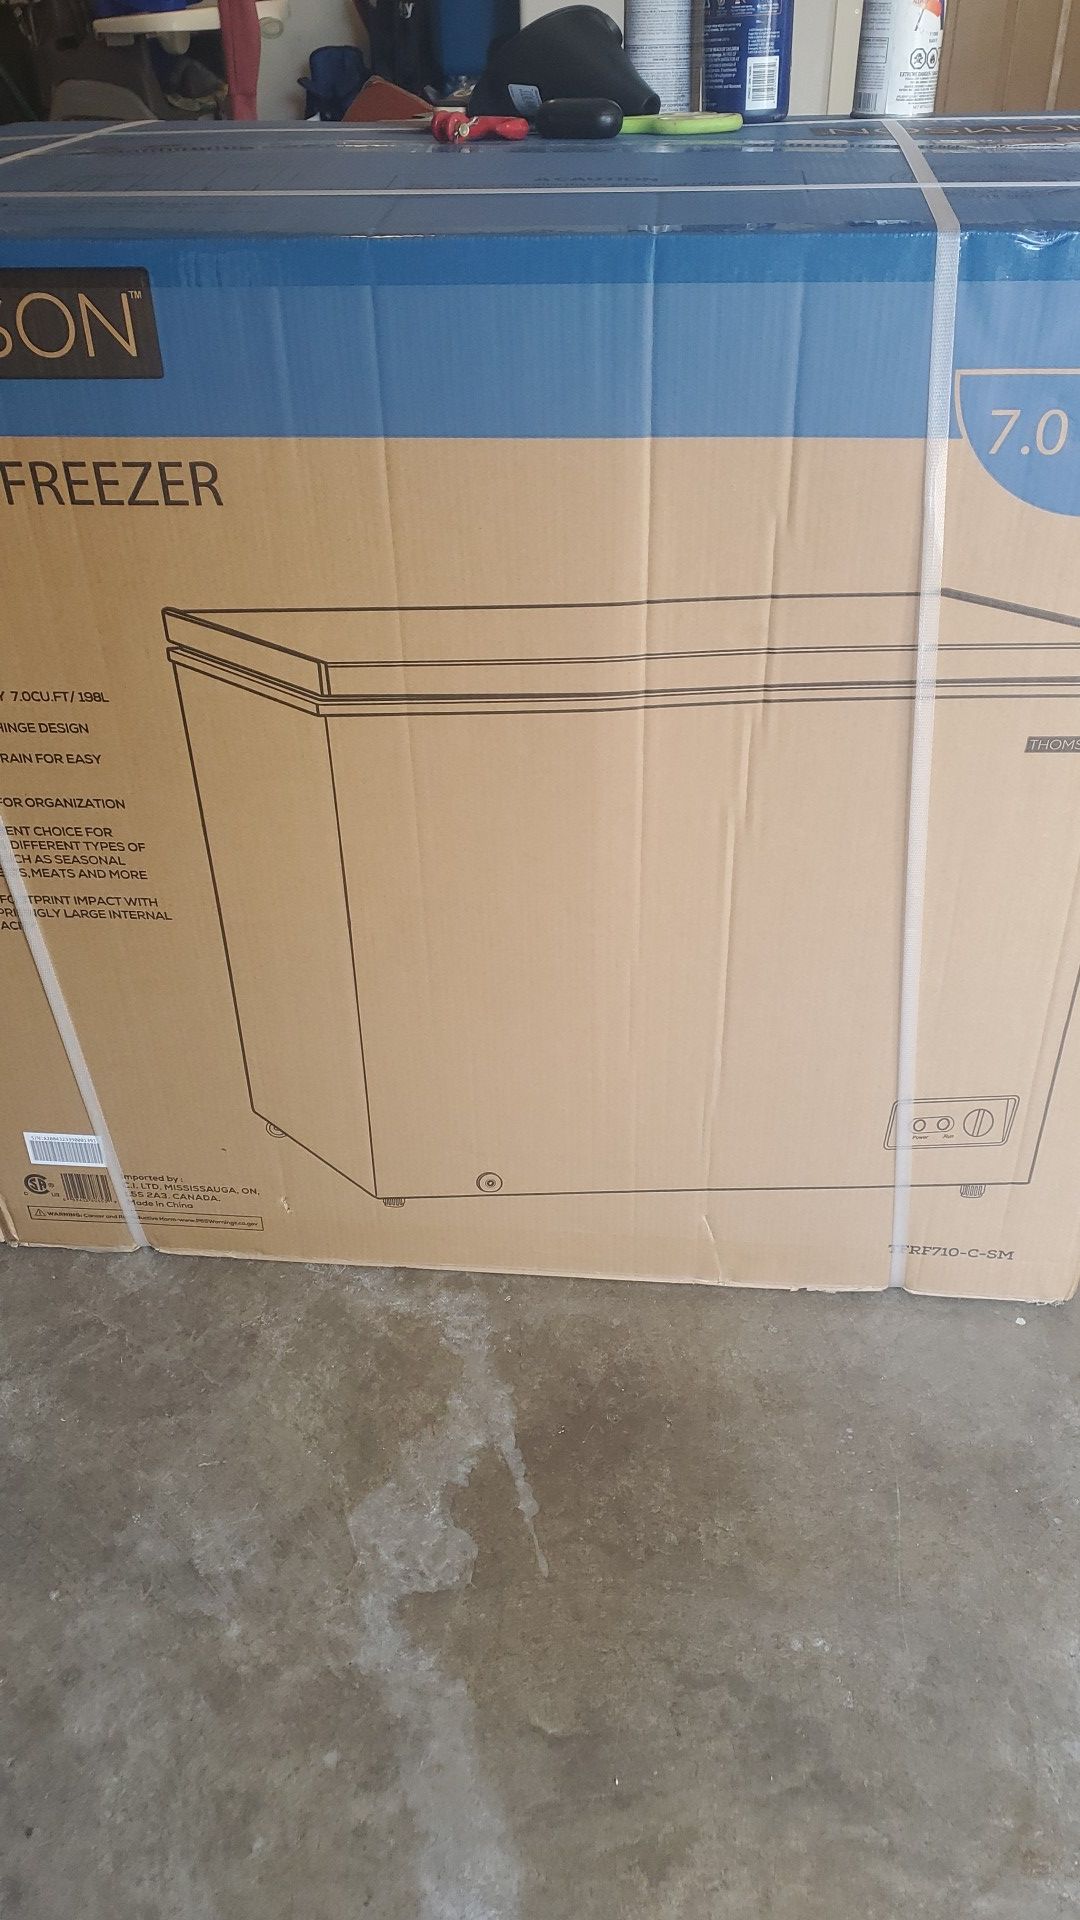 Freezer 7.0cu.ft new